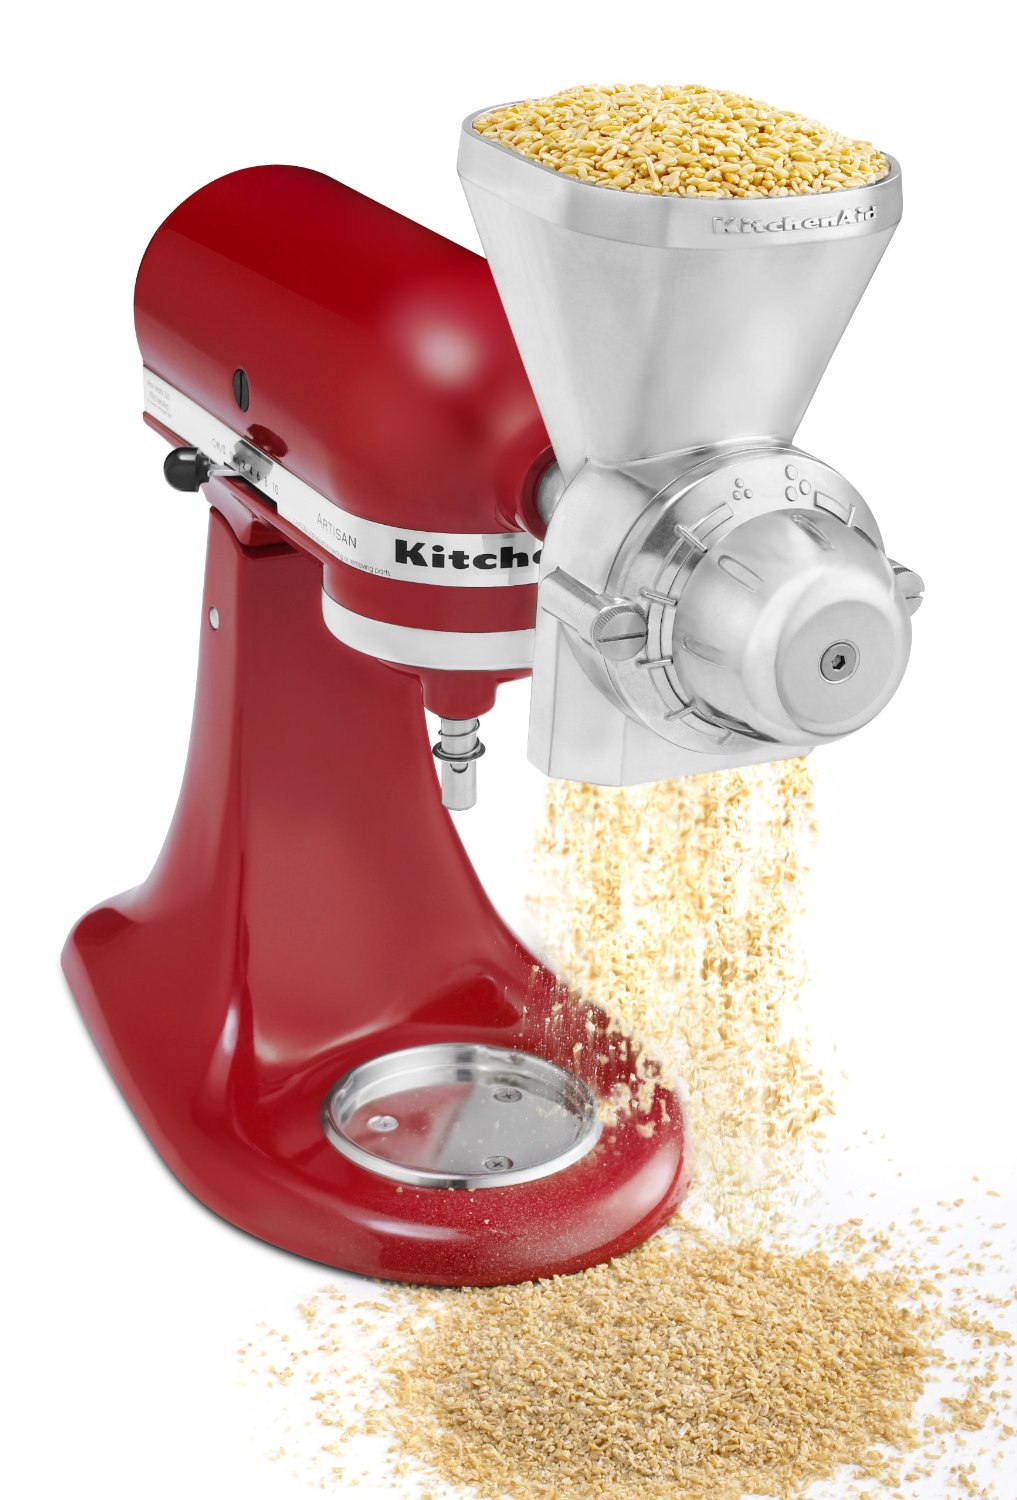 kitchenaid-kgm-stand-mixer-grain-mill-attachment-on-sale-at-cheapest